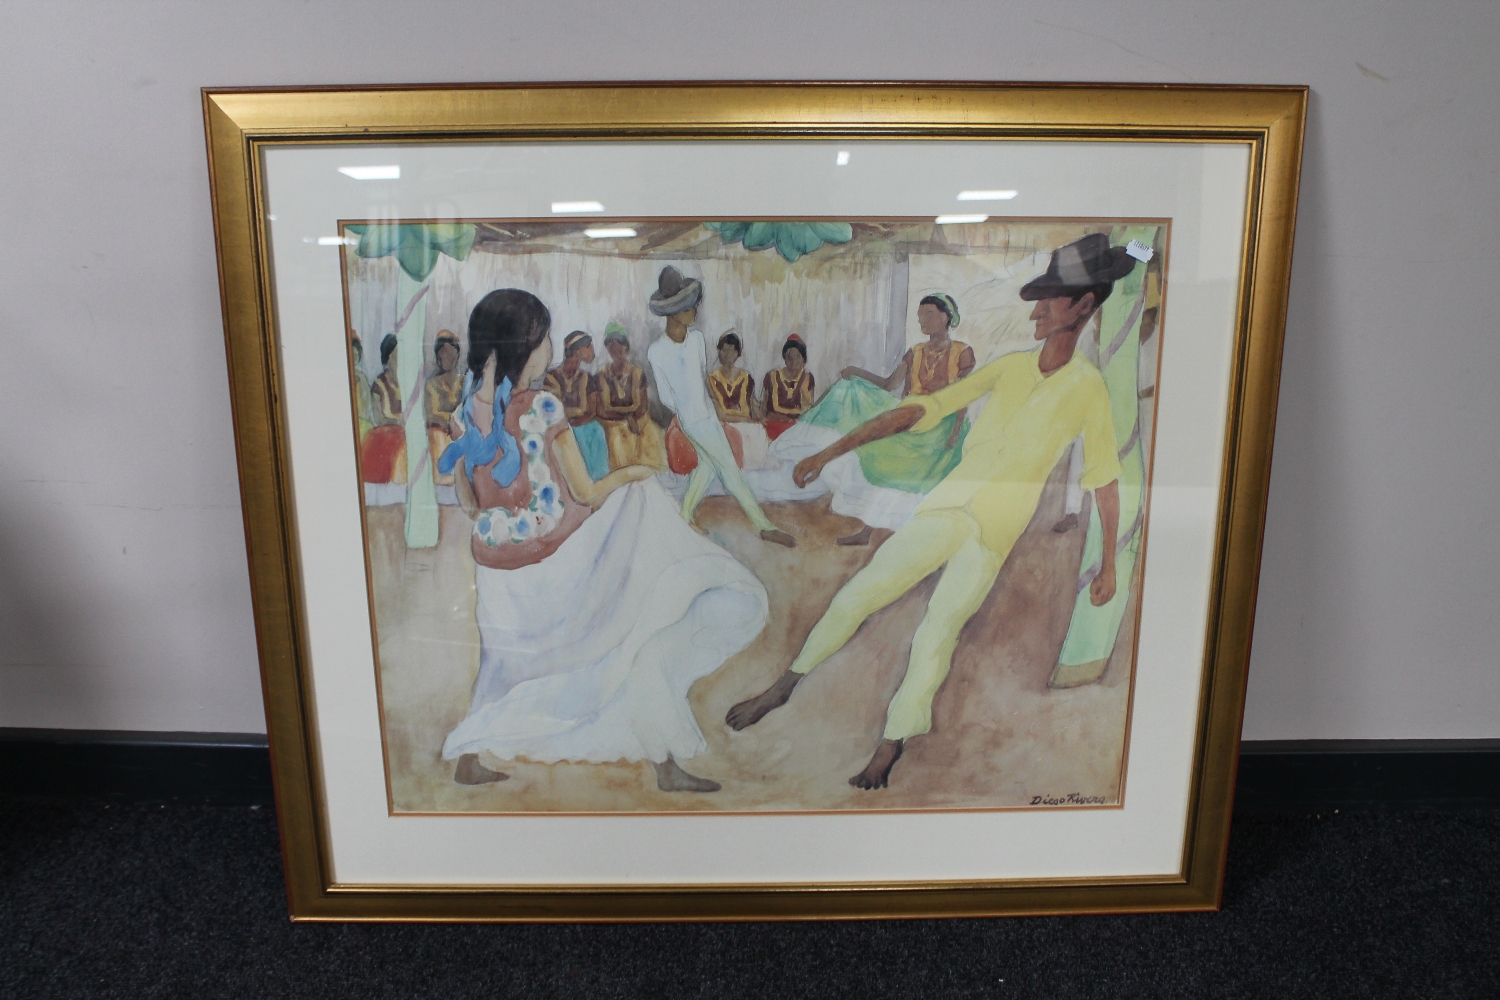 A gilt framed Diego Riveria print - figures dancing